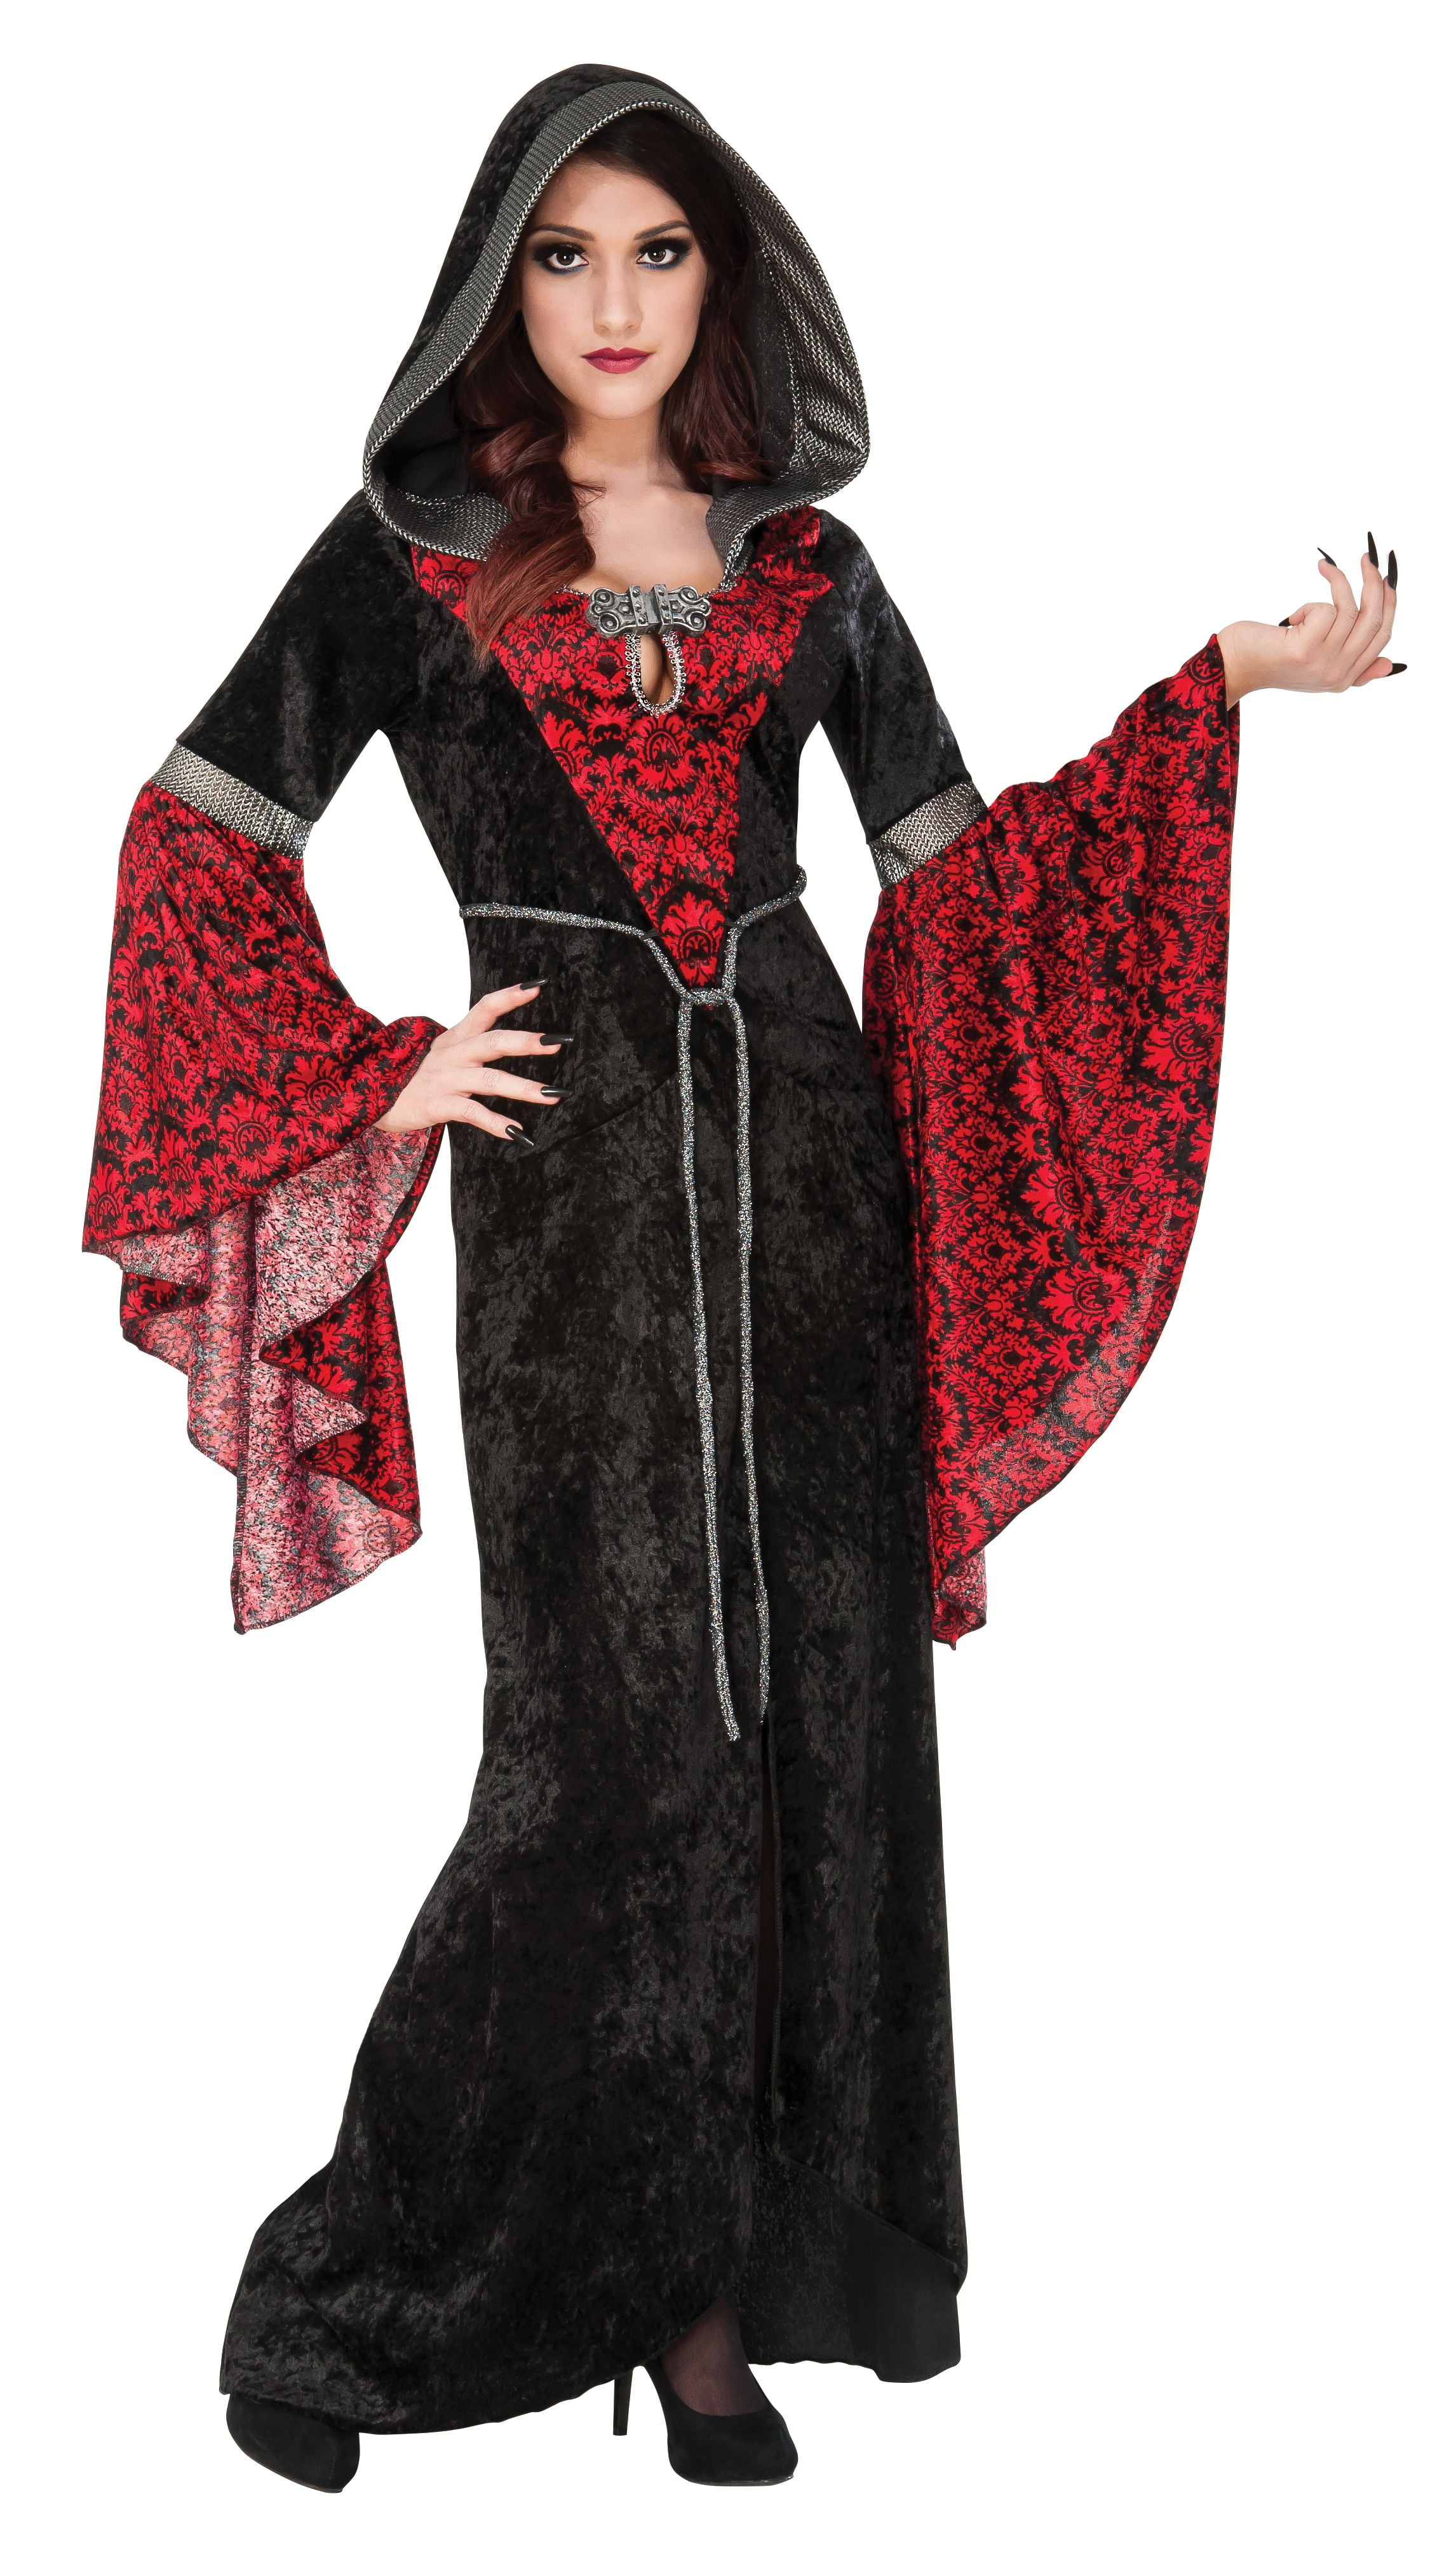 Adult Female Cryptisha Vampire Costume by Rubies 810518 - Walmart.com ...